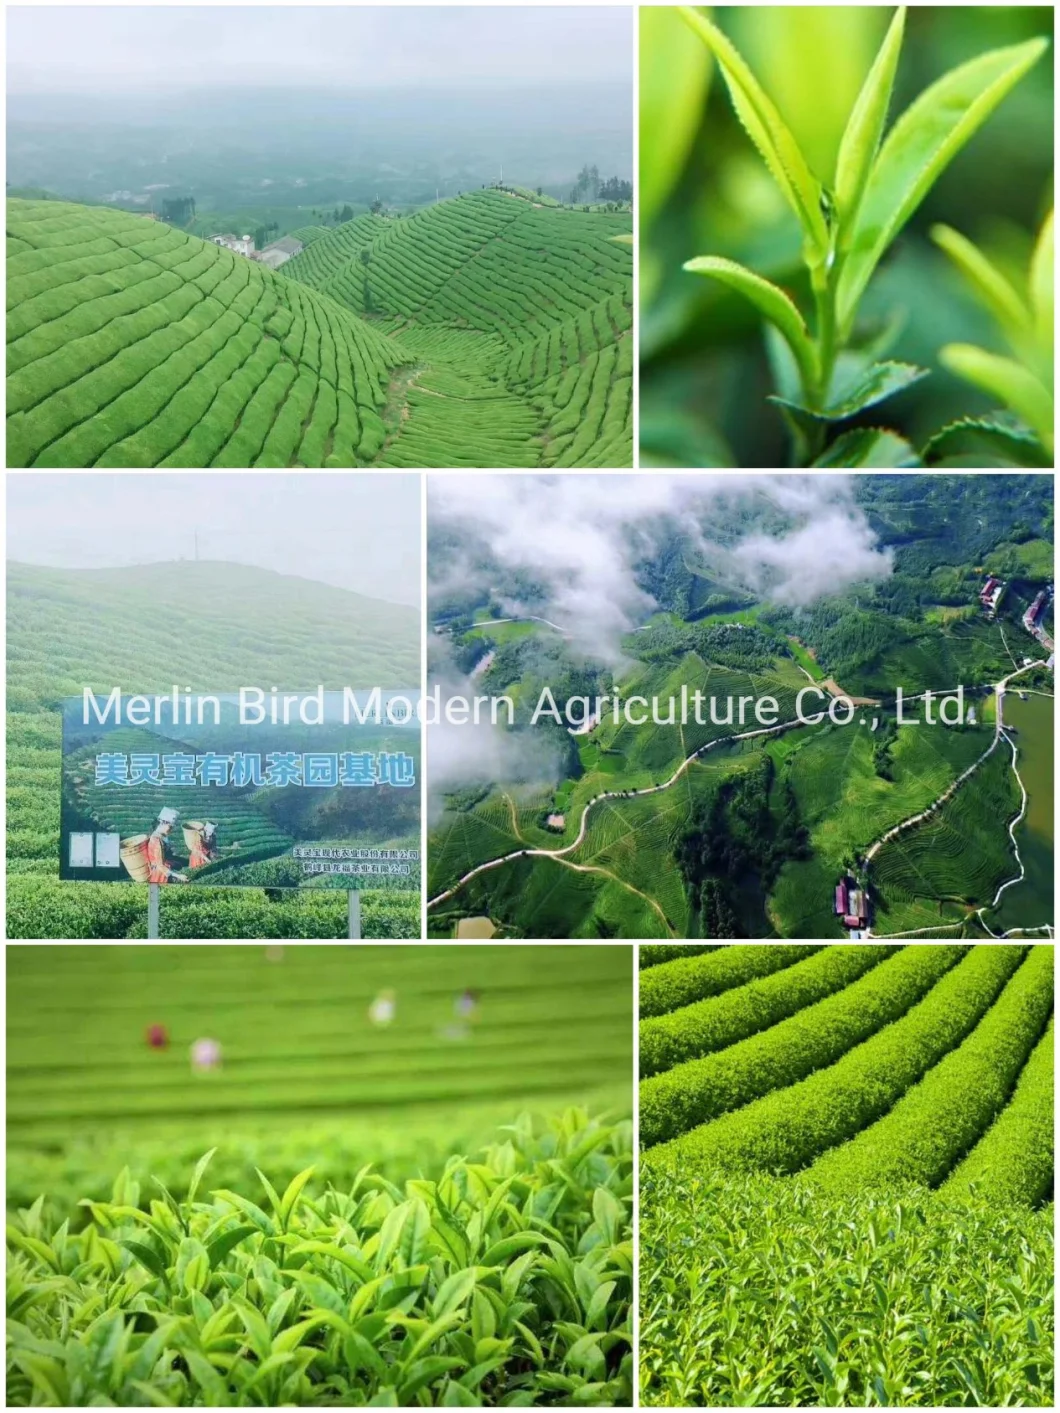 Herbal Healthy Natural Dried Mint Flavor Green Tea